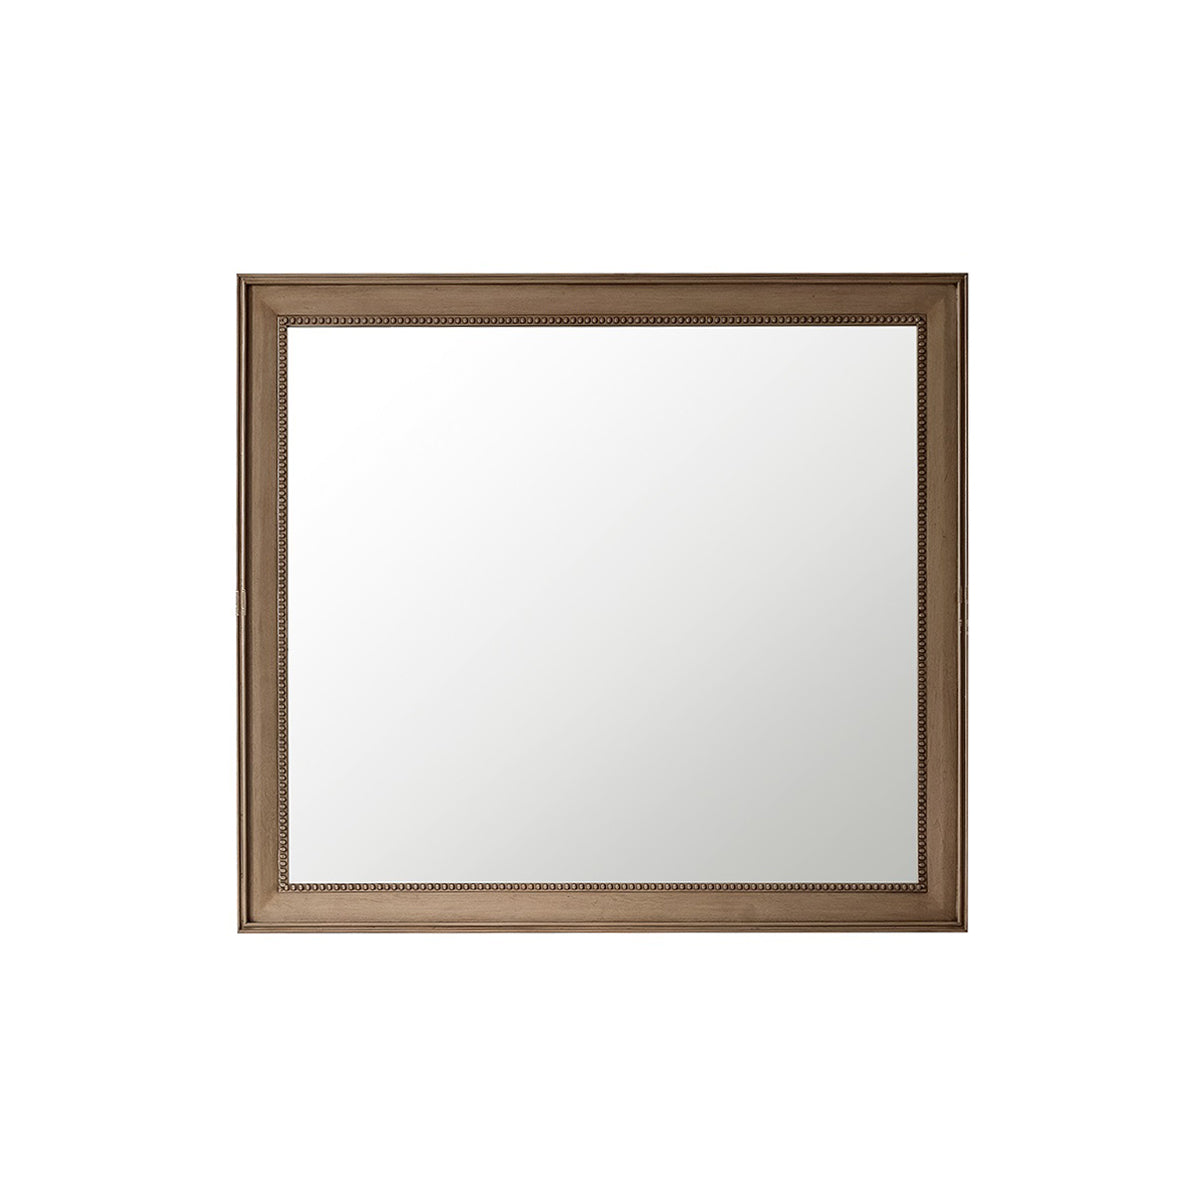 James Martin Vanities Bristol 44" Rectangular Mirror, White Washed Walnut